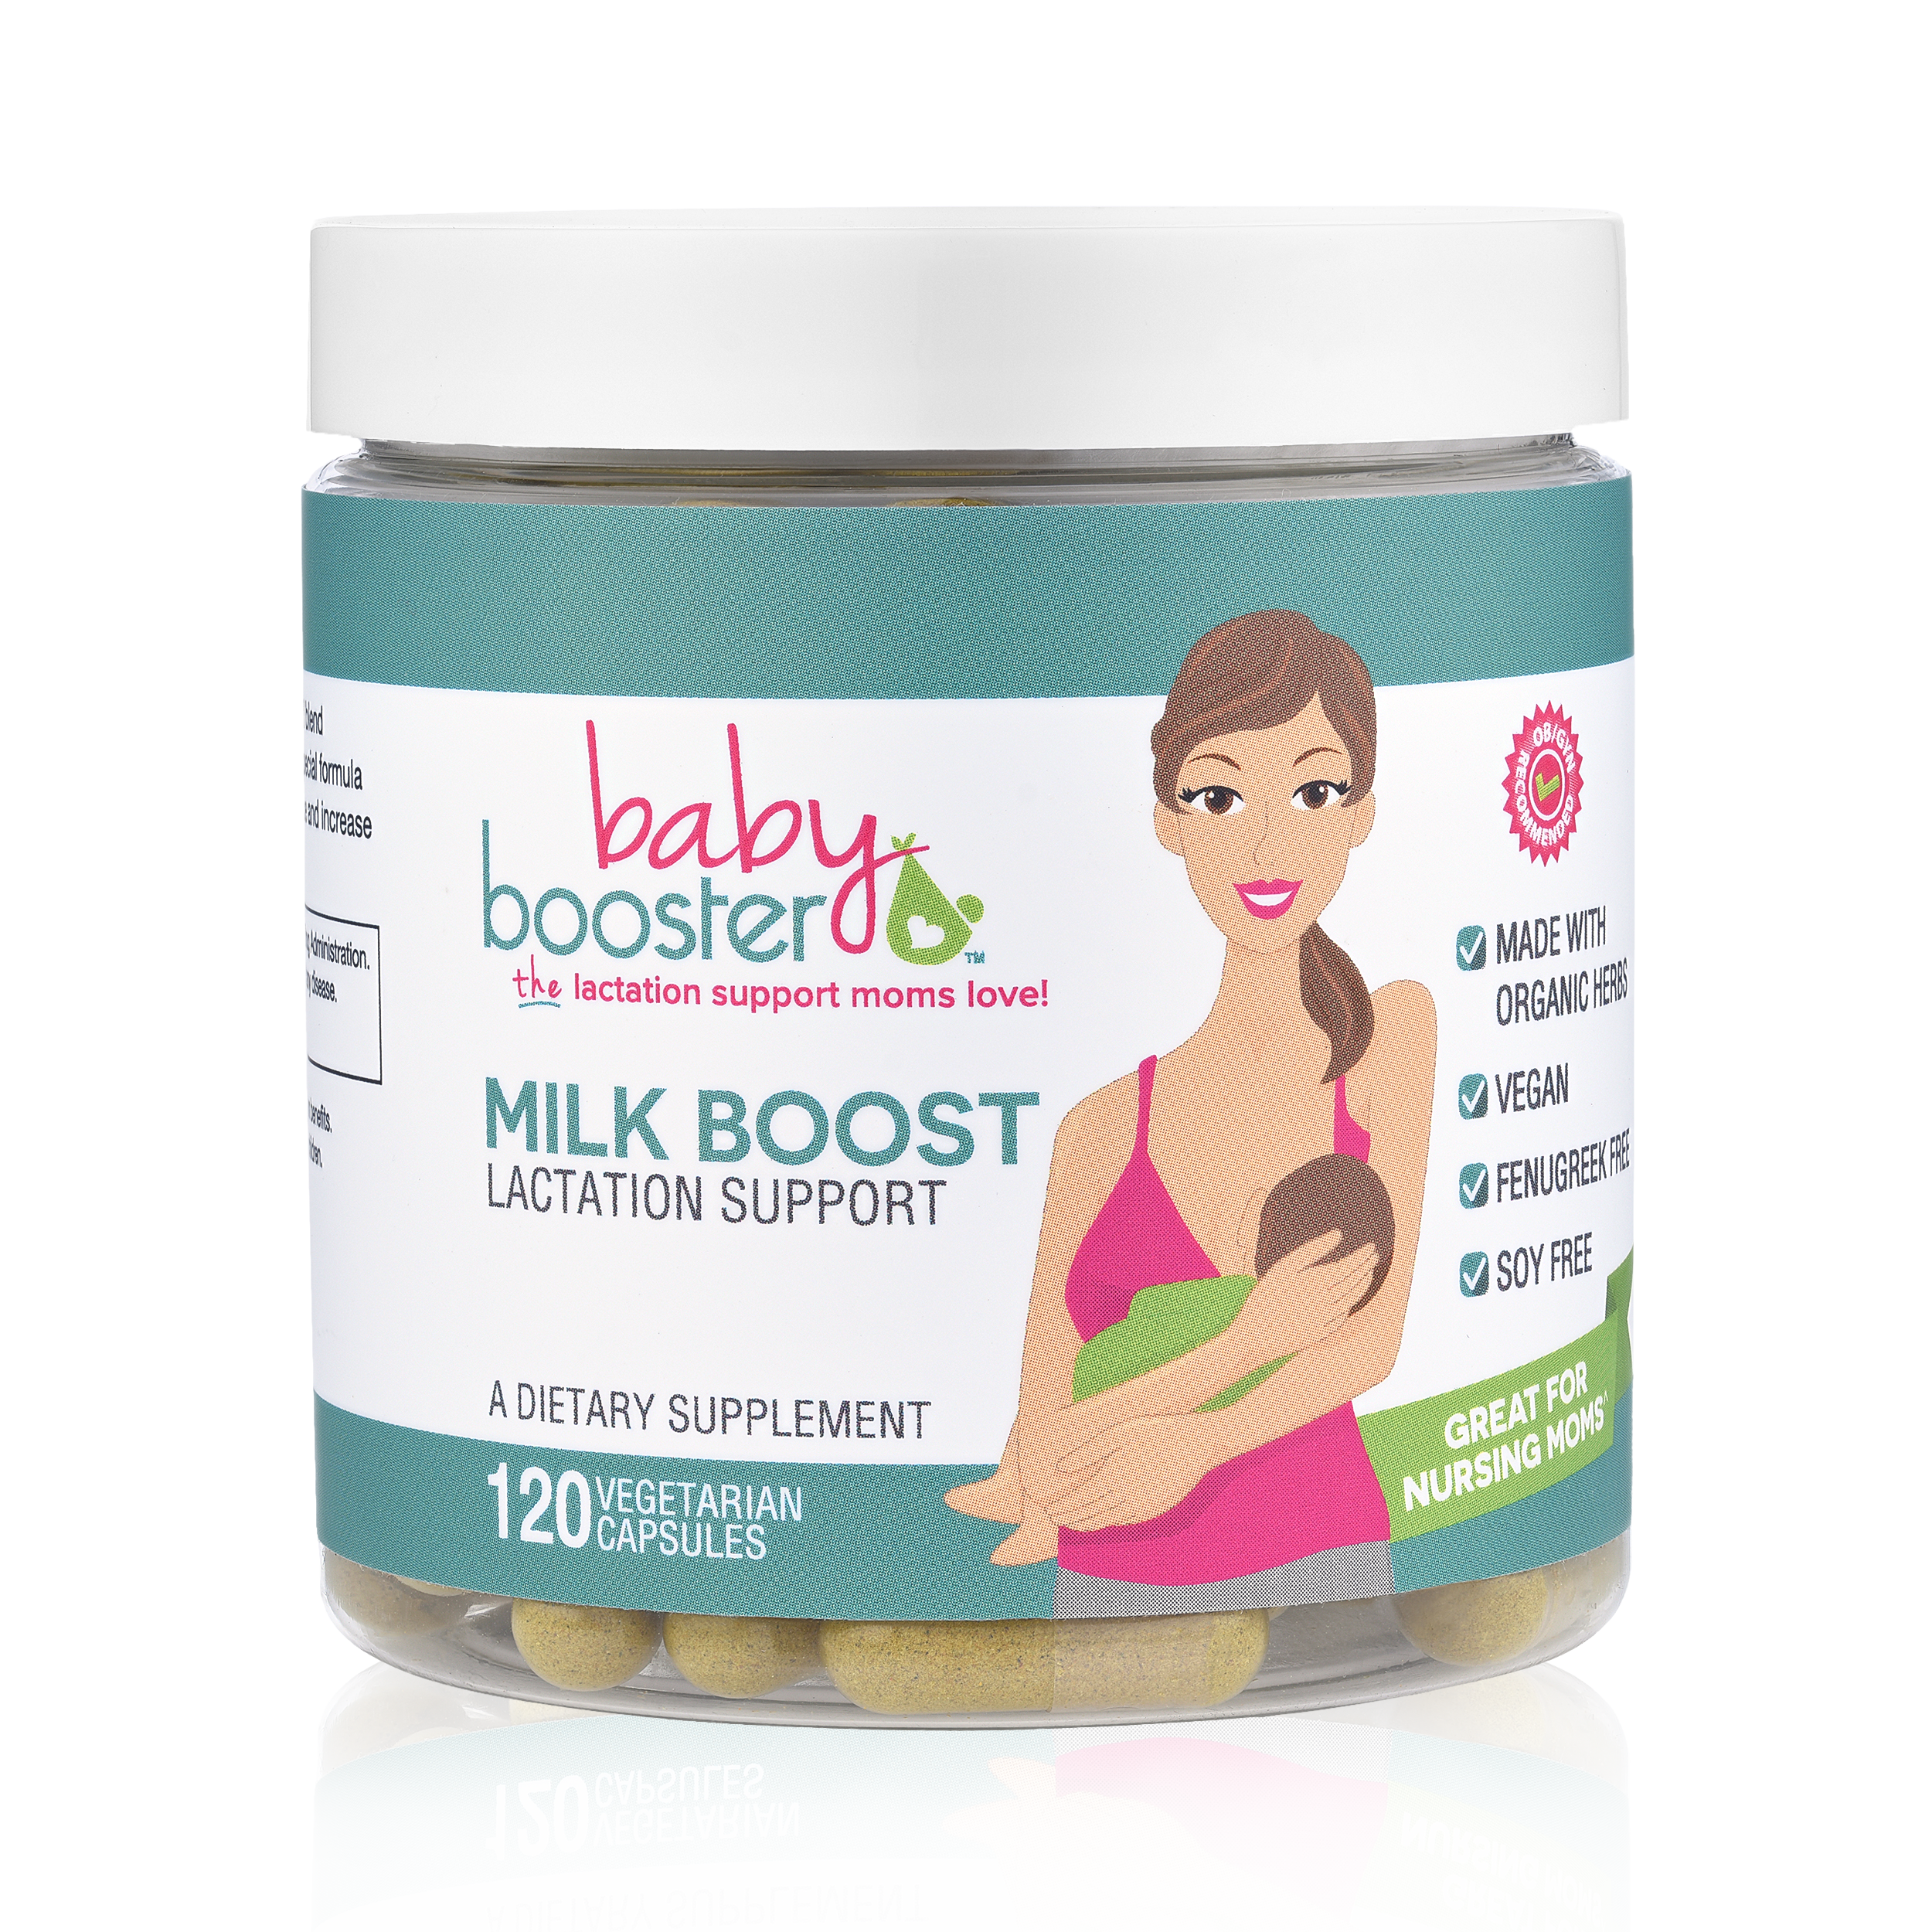 Blender Bottle - shop – Baby Booster Prenatal Protein Supplements